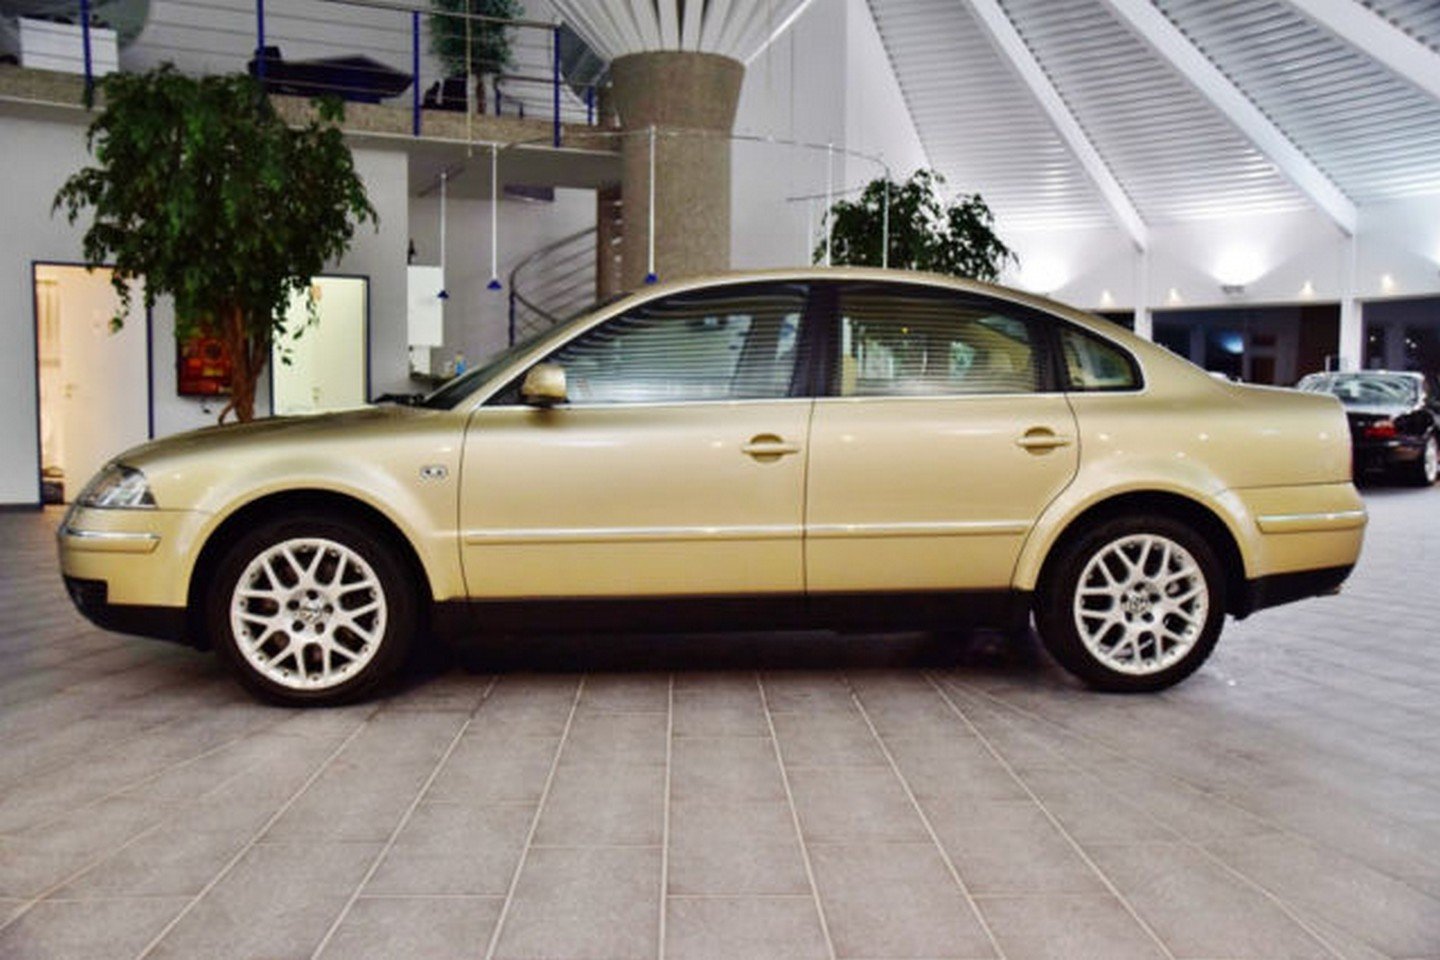 Neobvyklá je i zlatá metalíza, Volkswagen Passat W8.